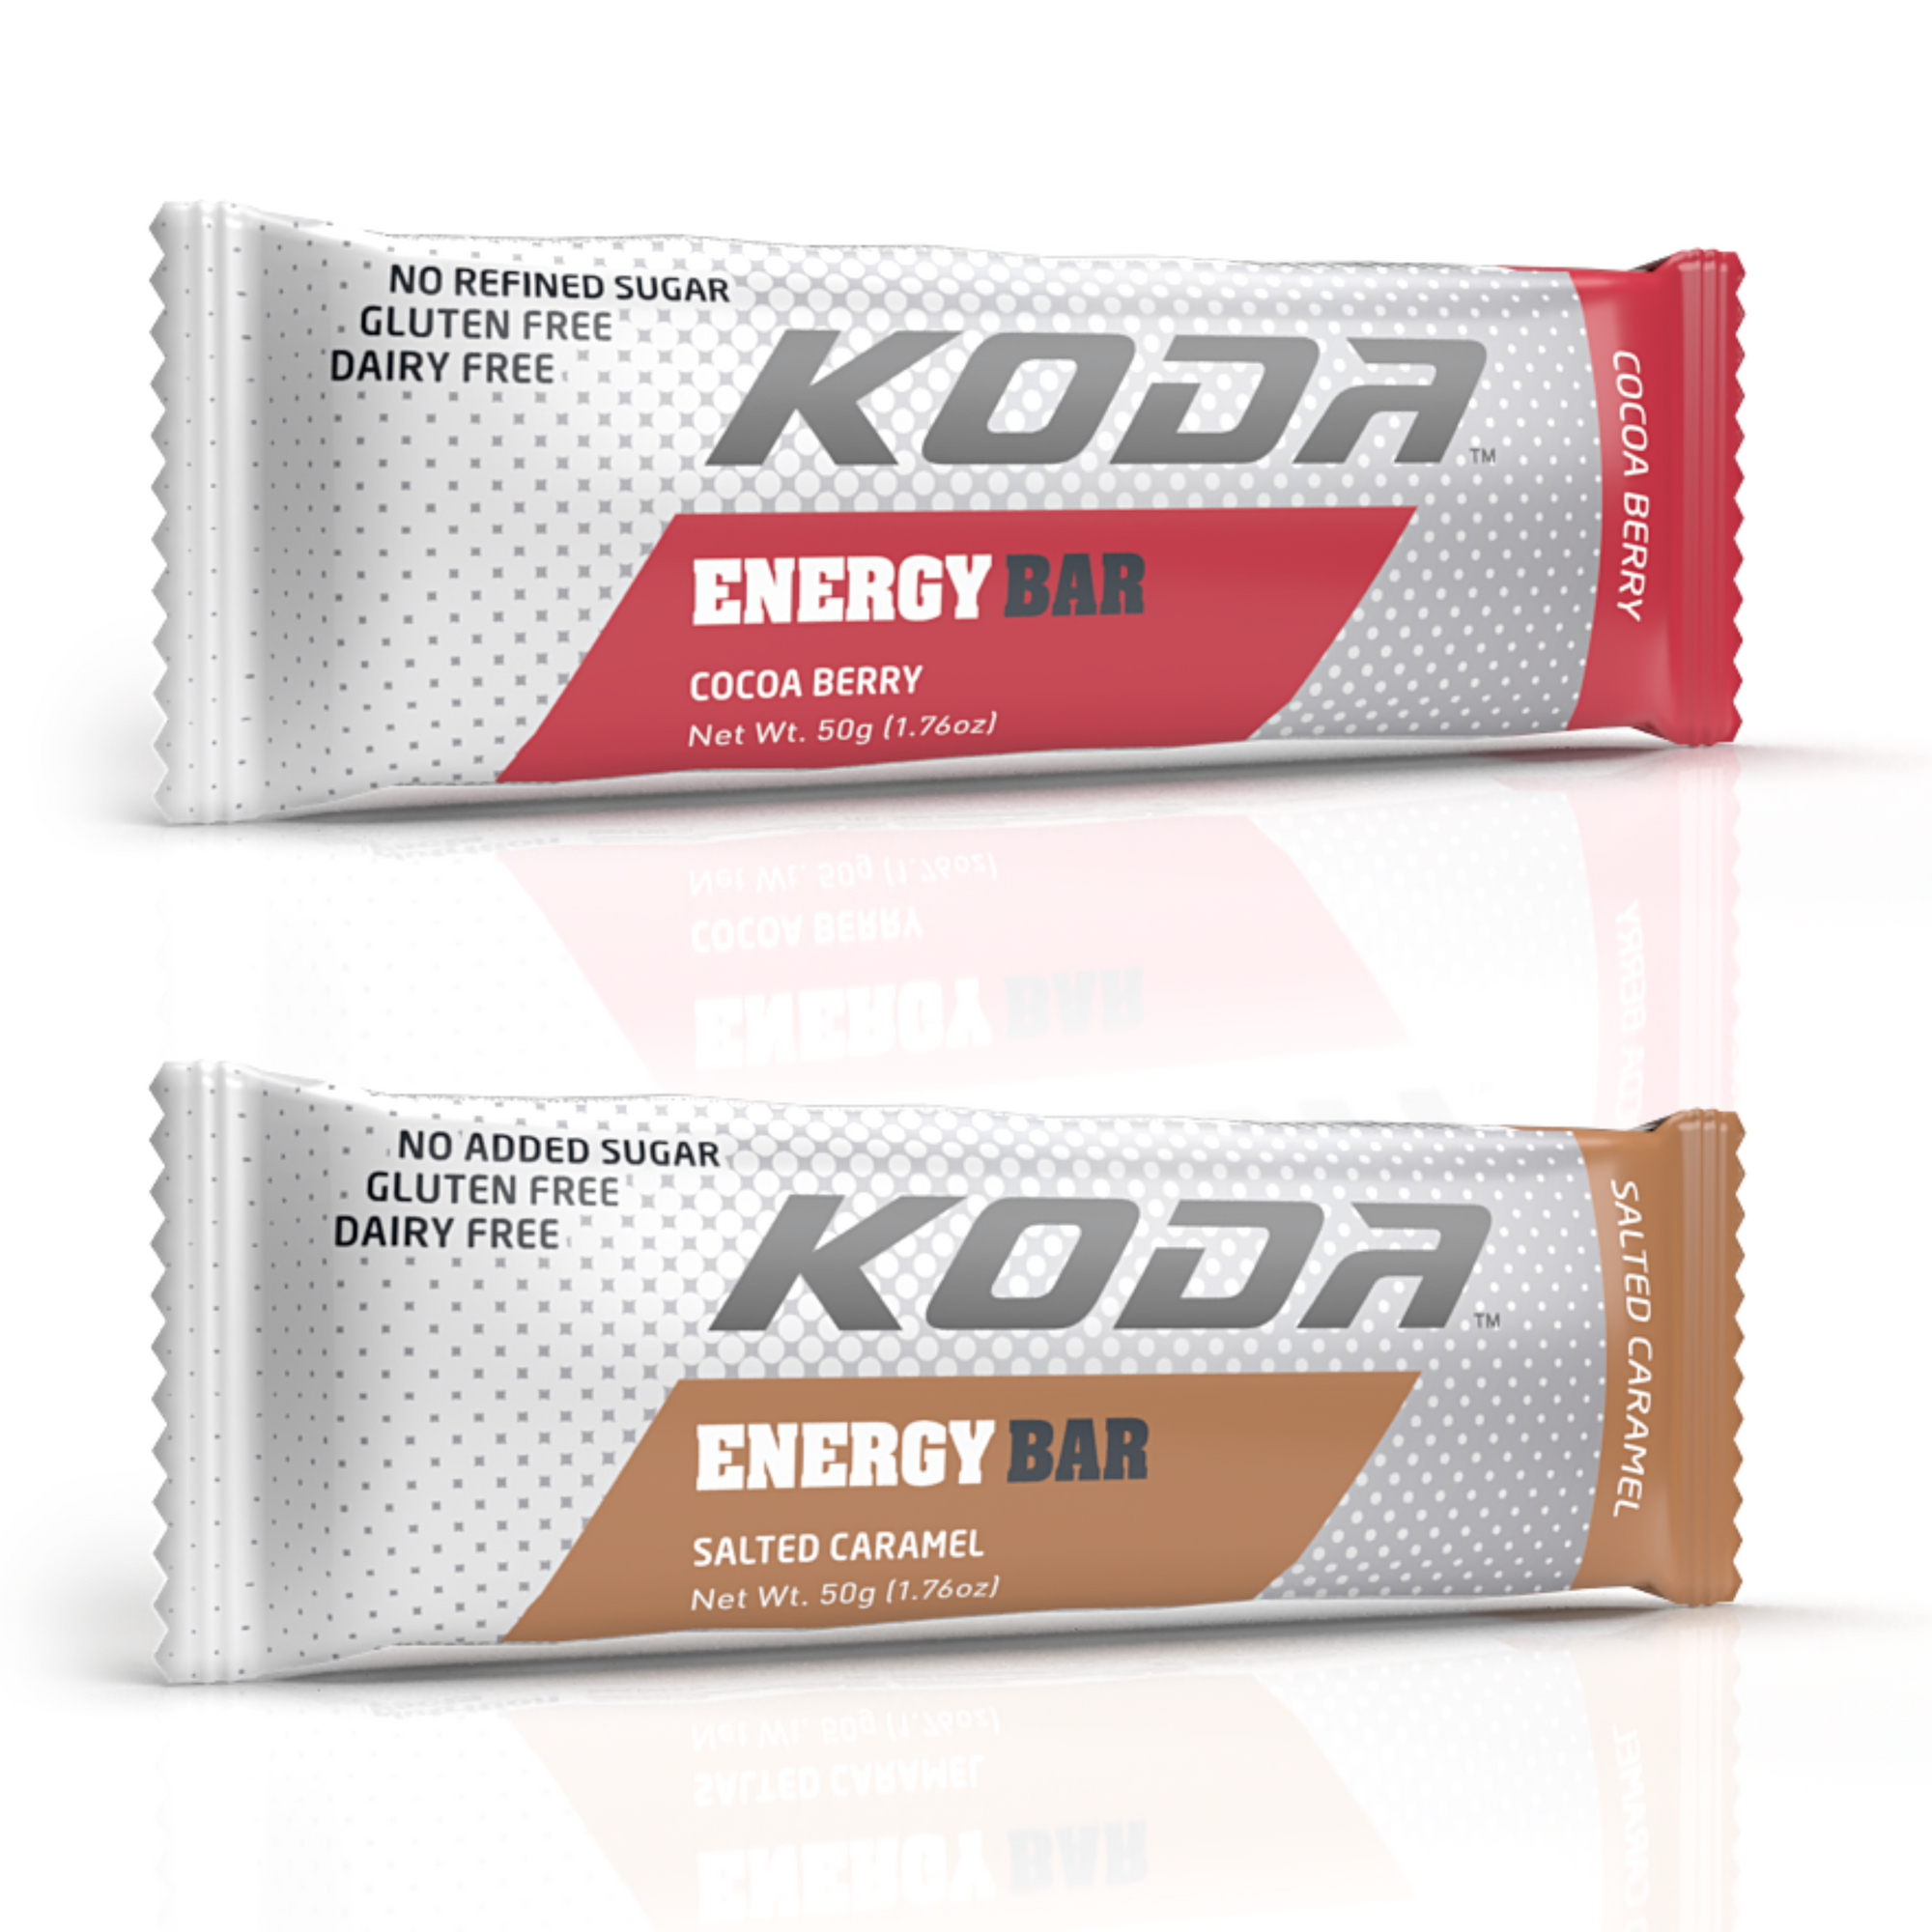 KODA Energy Bar Mixed Pack (12 pack)